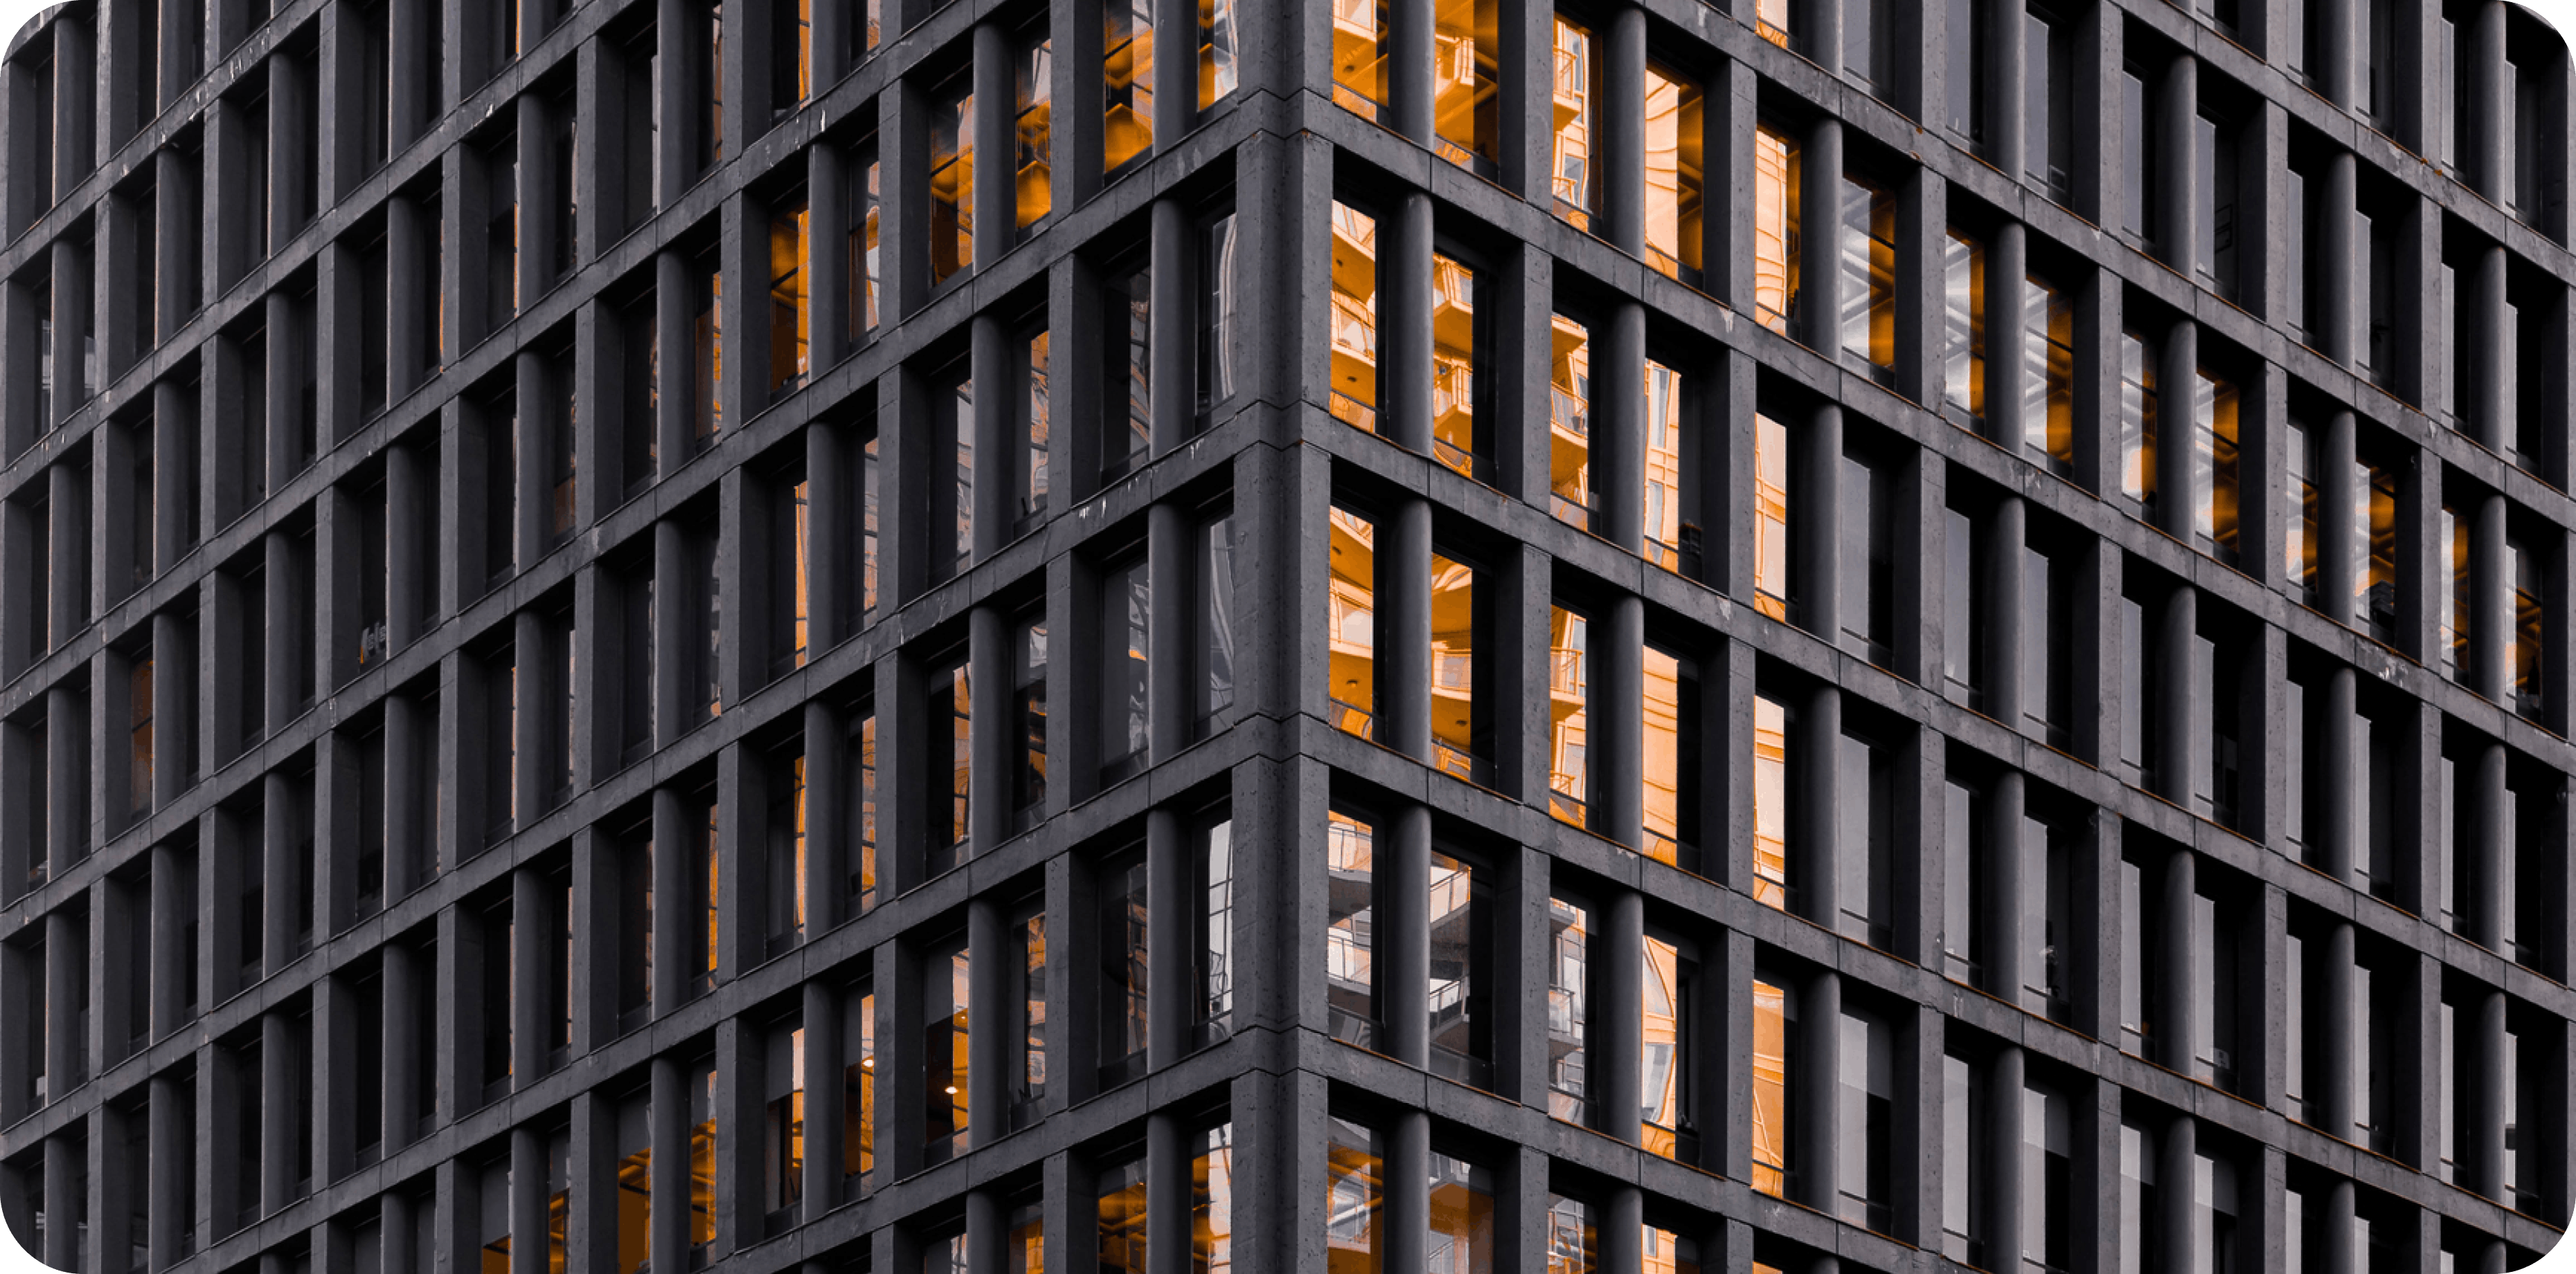 The facade of a modern office building